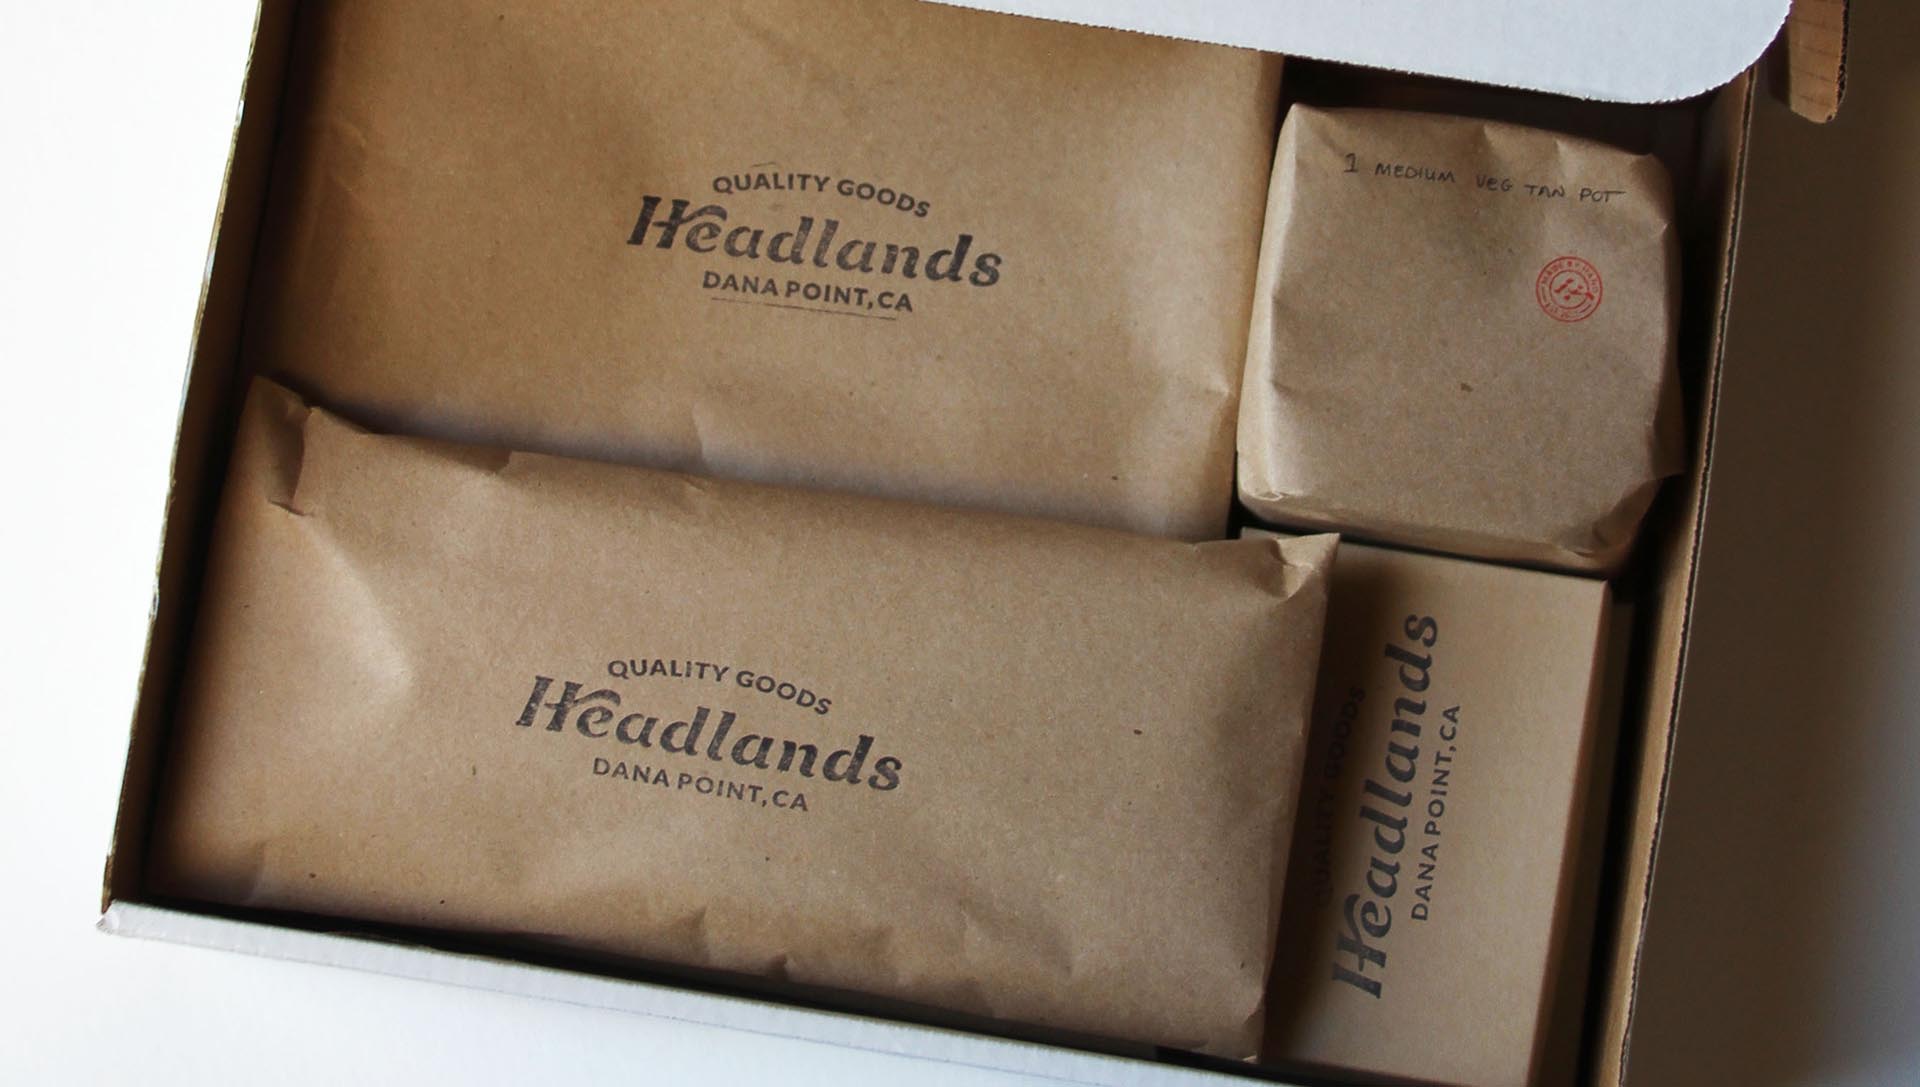 Apparel branding for Headlands Handmade by Hoodzpah branding agency in Newport Beach